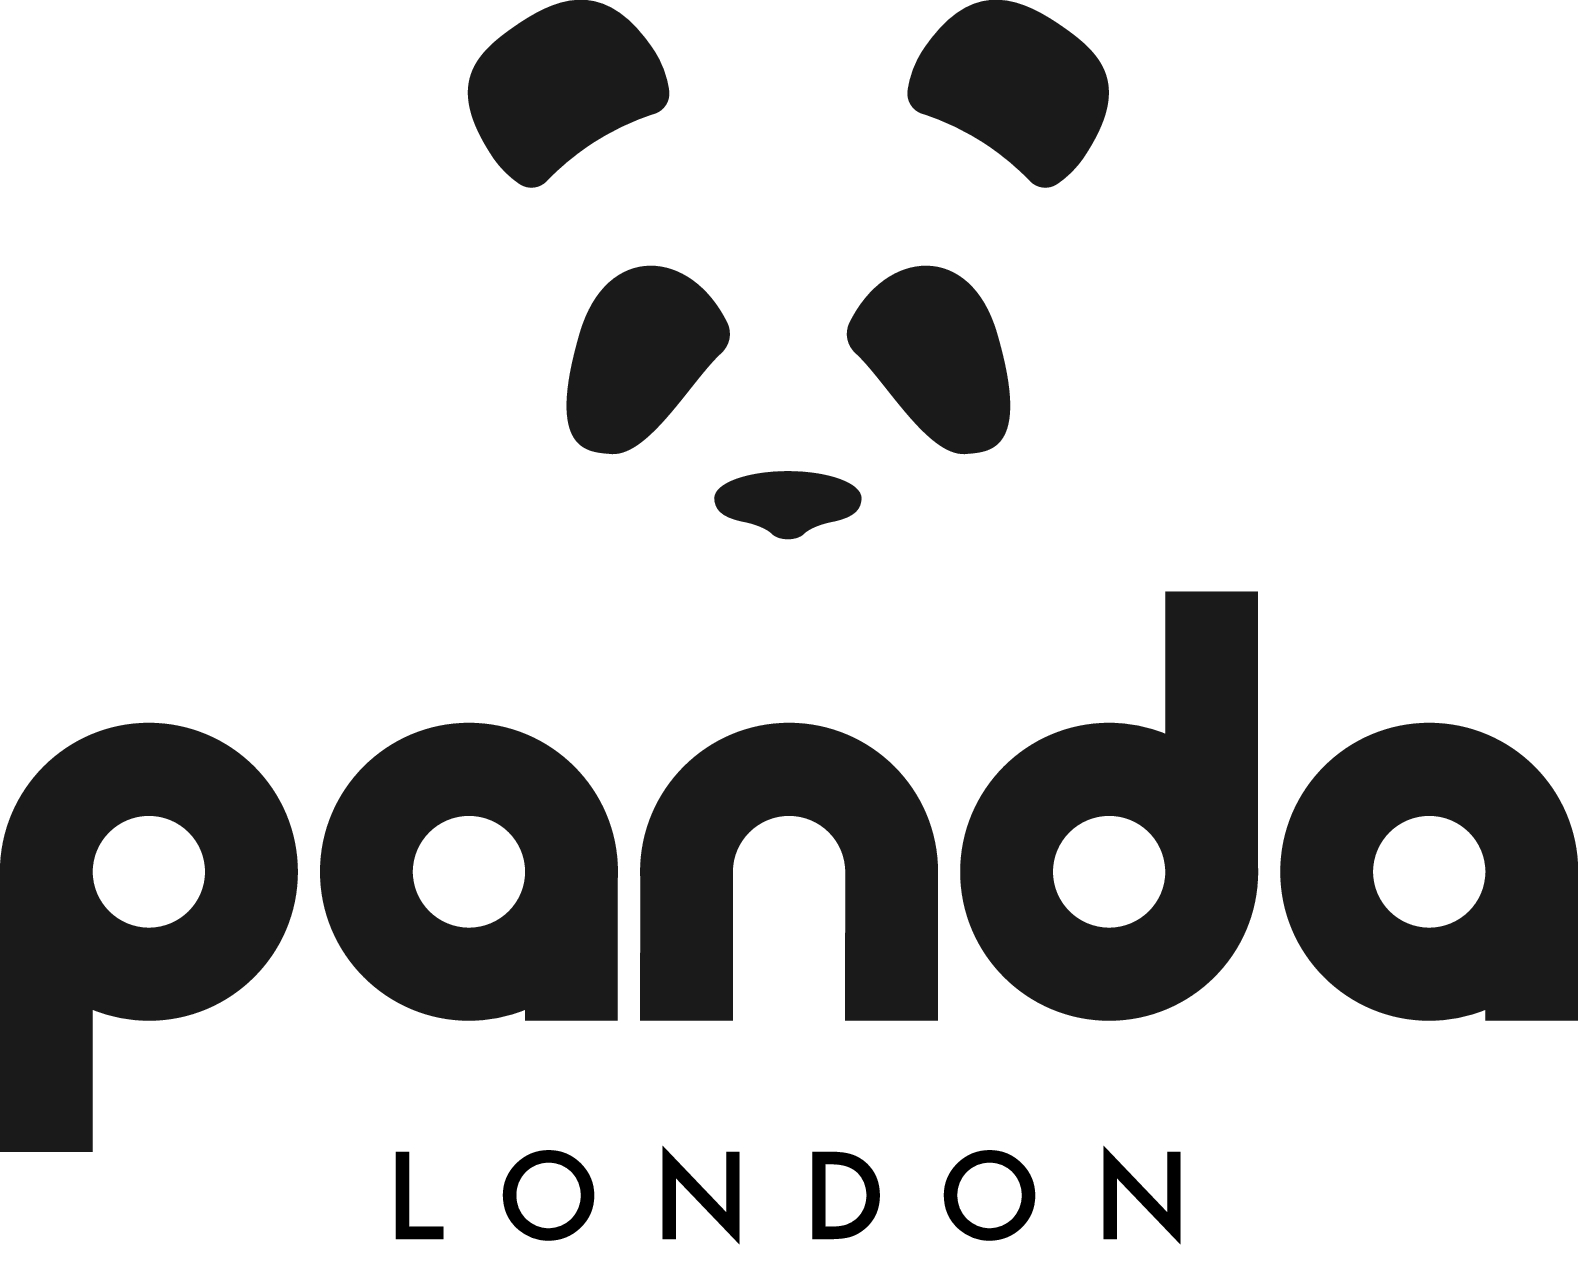  Panda London Voucher Code